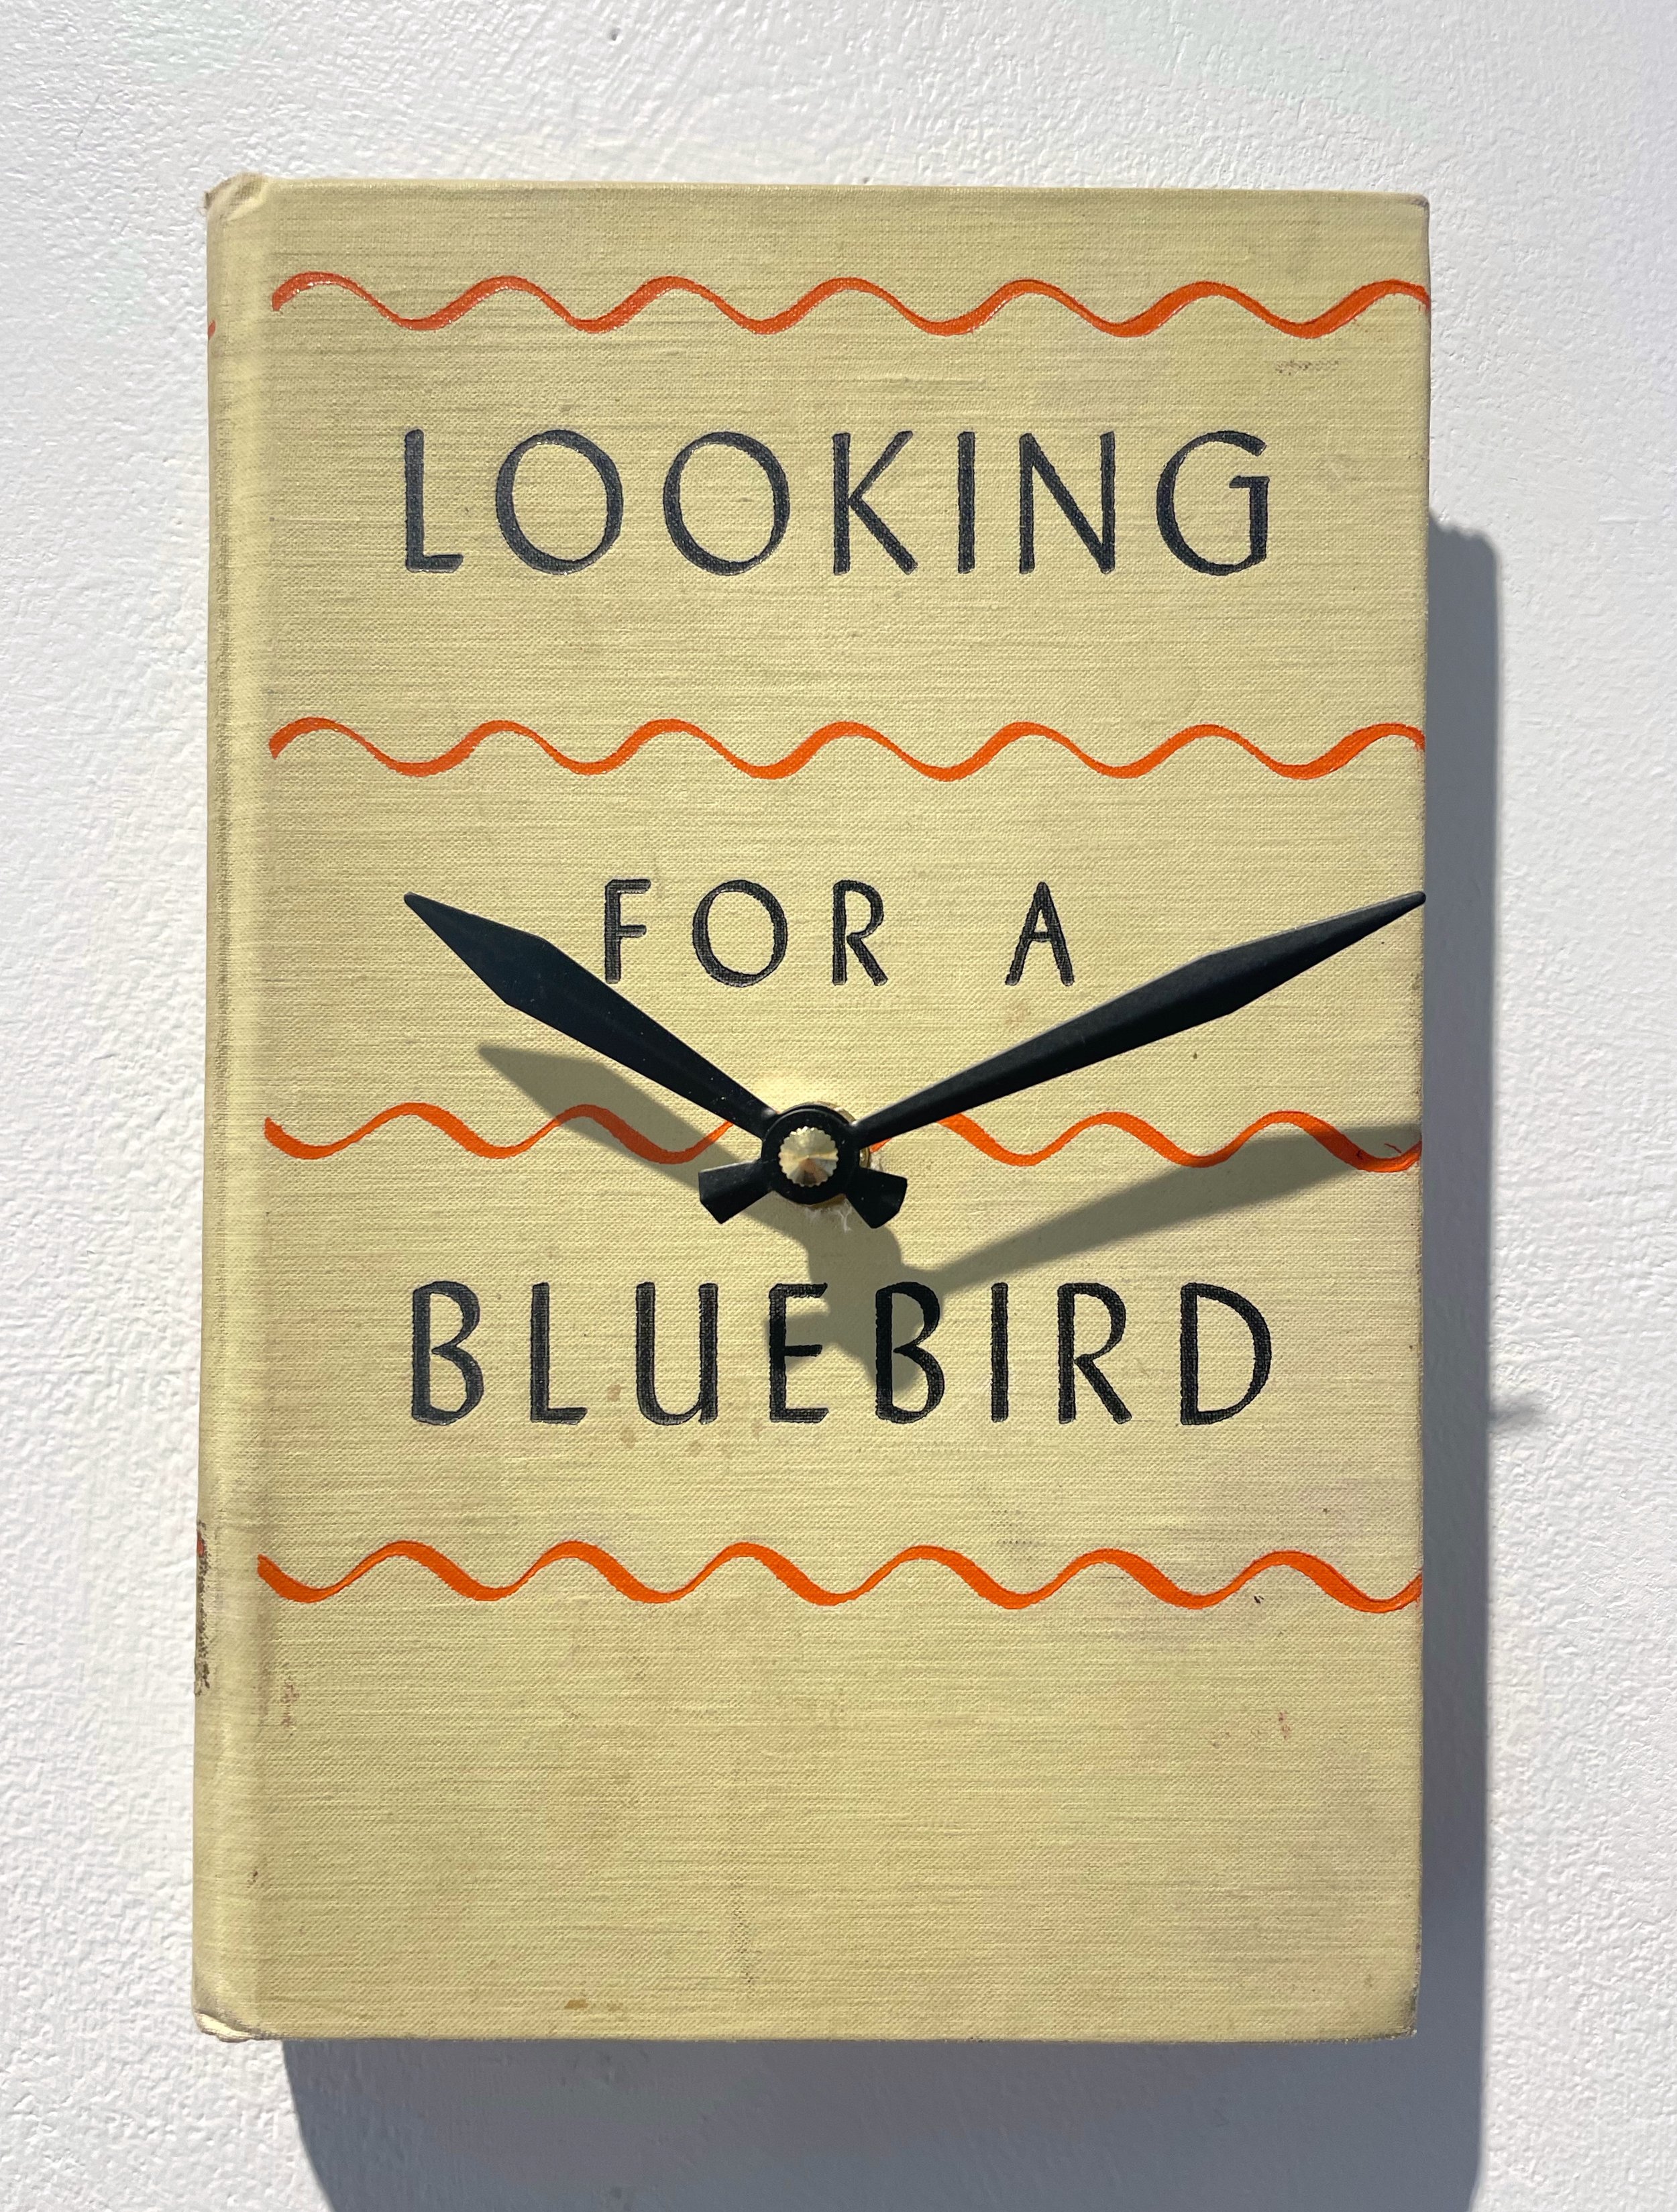 Bluebird Book Clock by Jim Rosenau